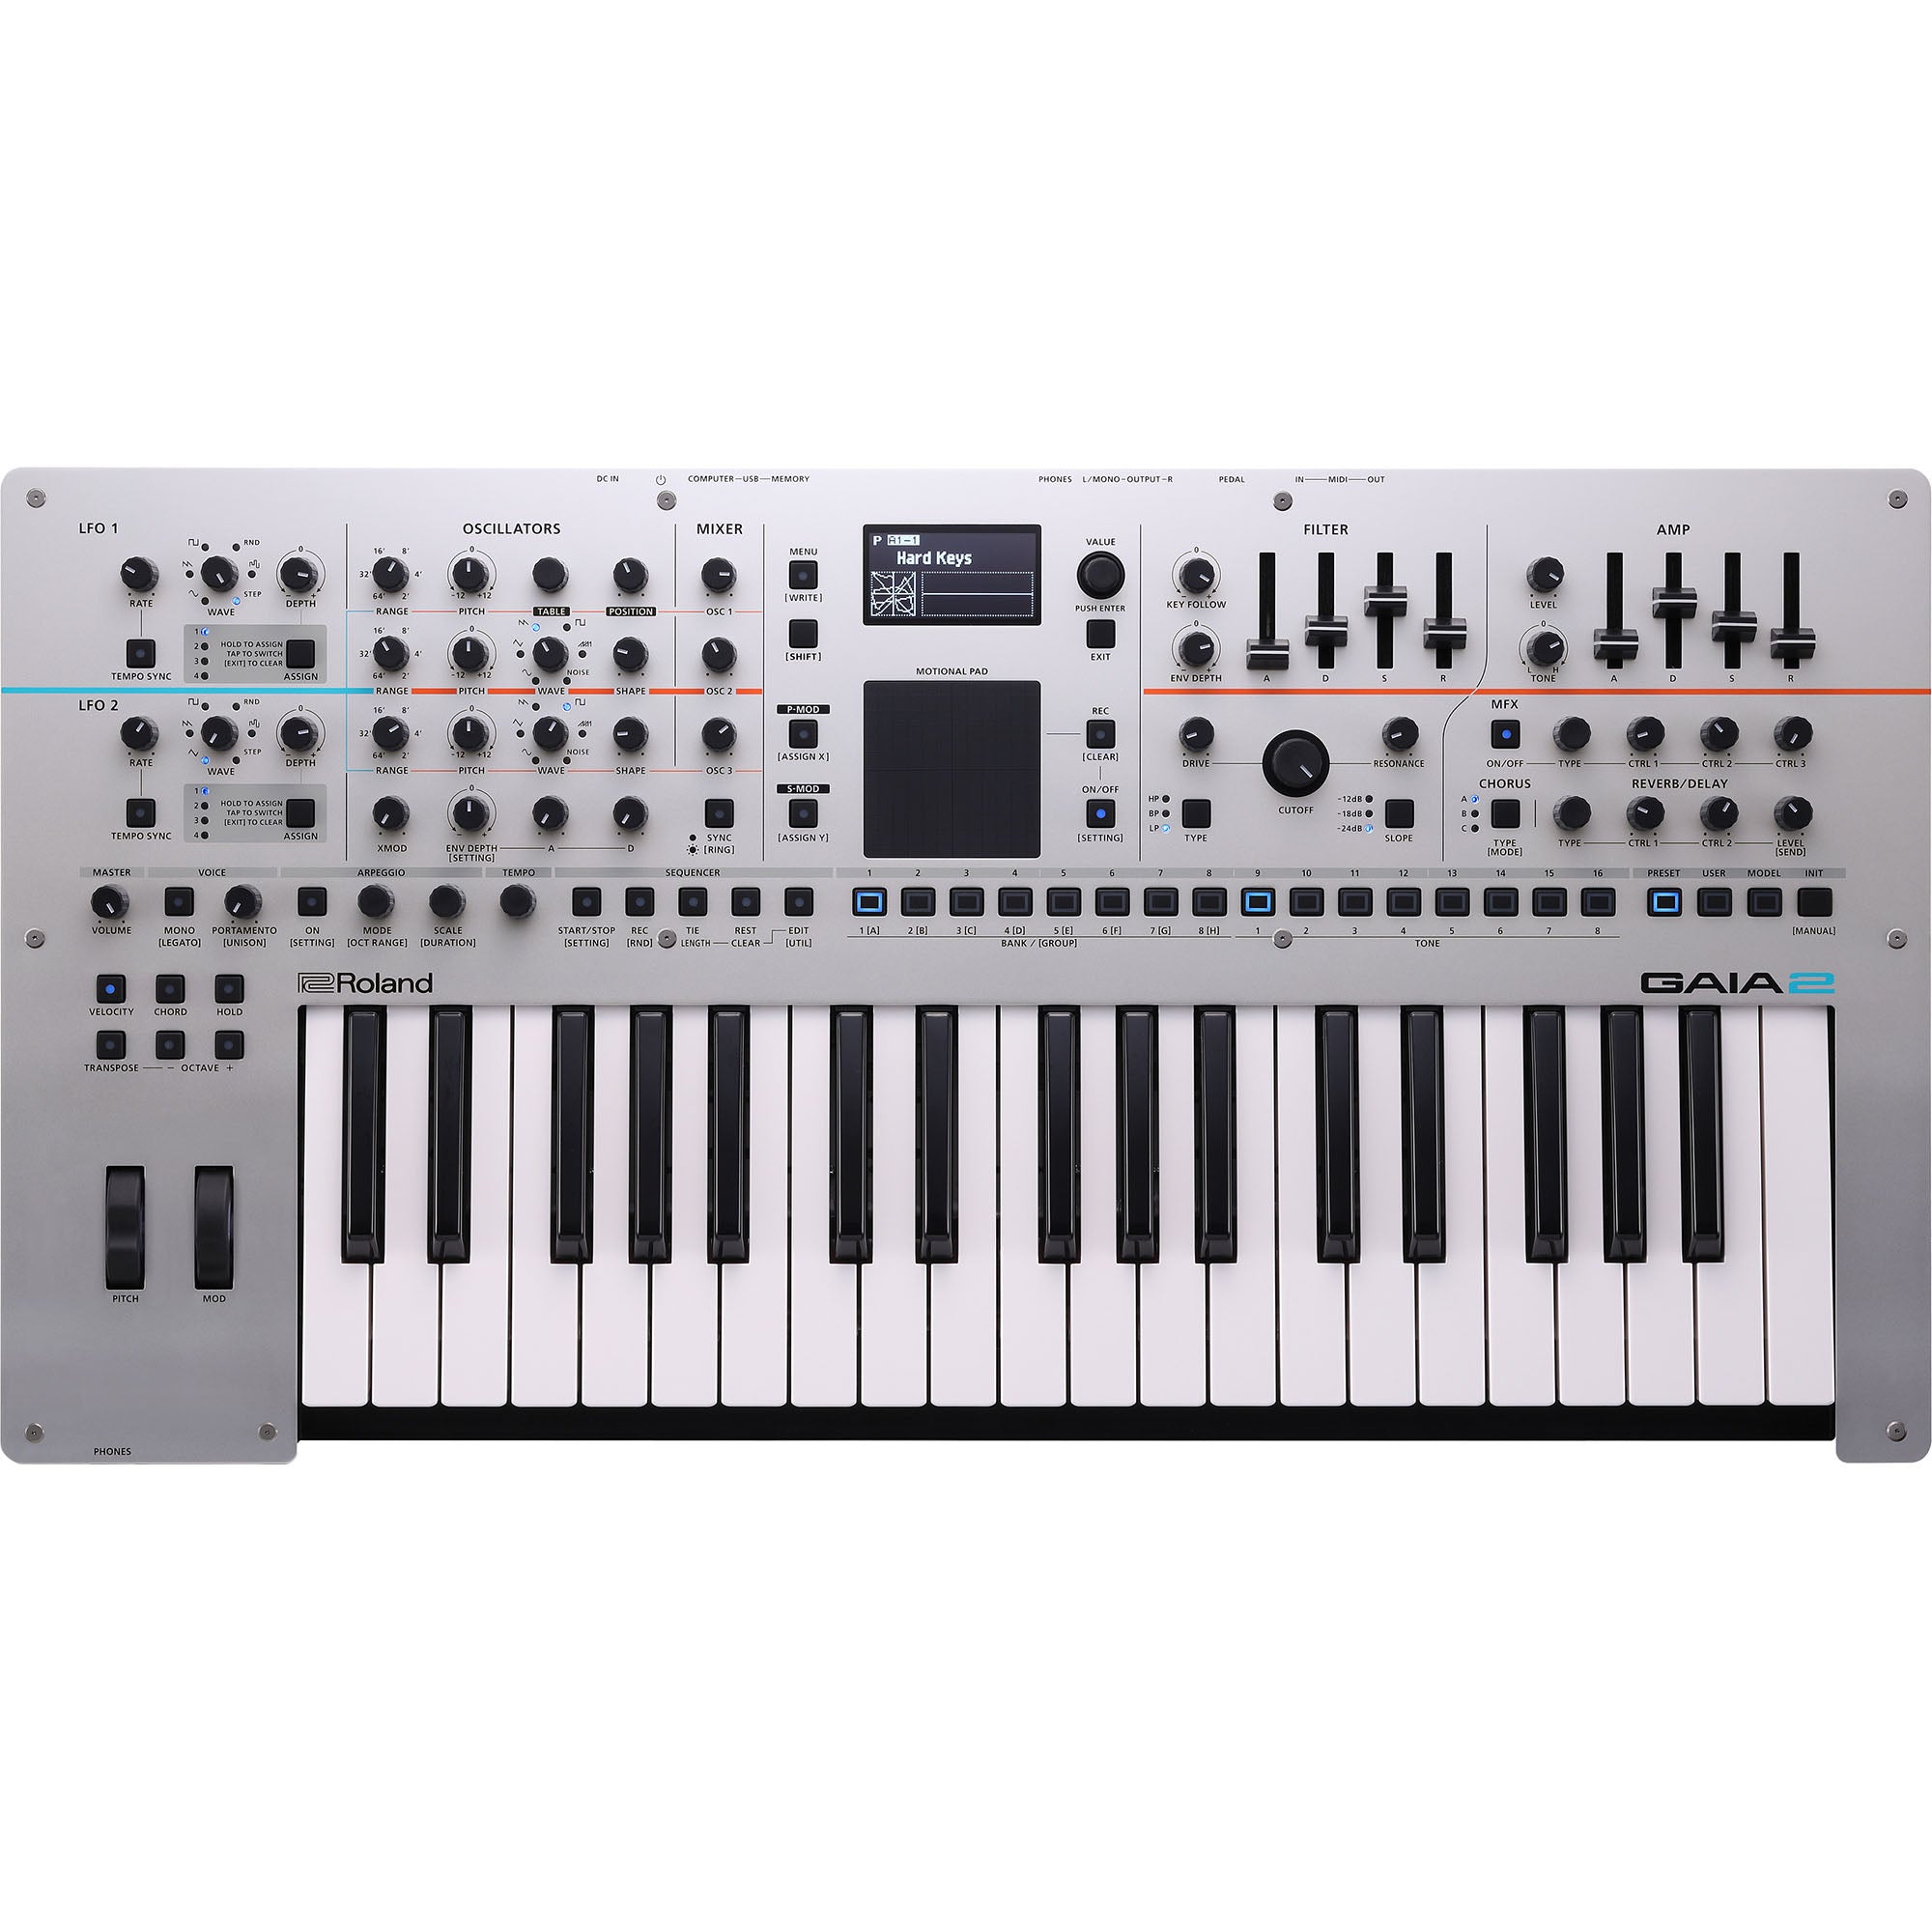 Roland GAIA-2 37 key Synthesizer